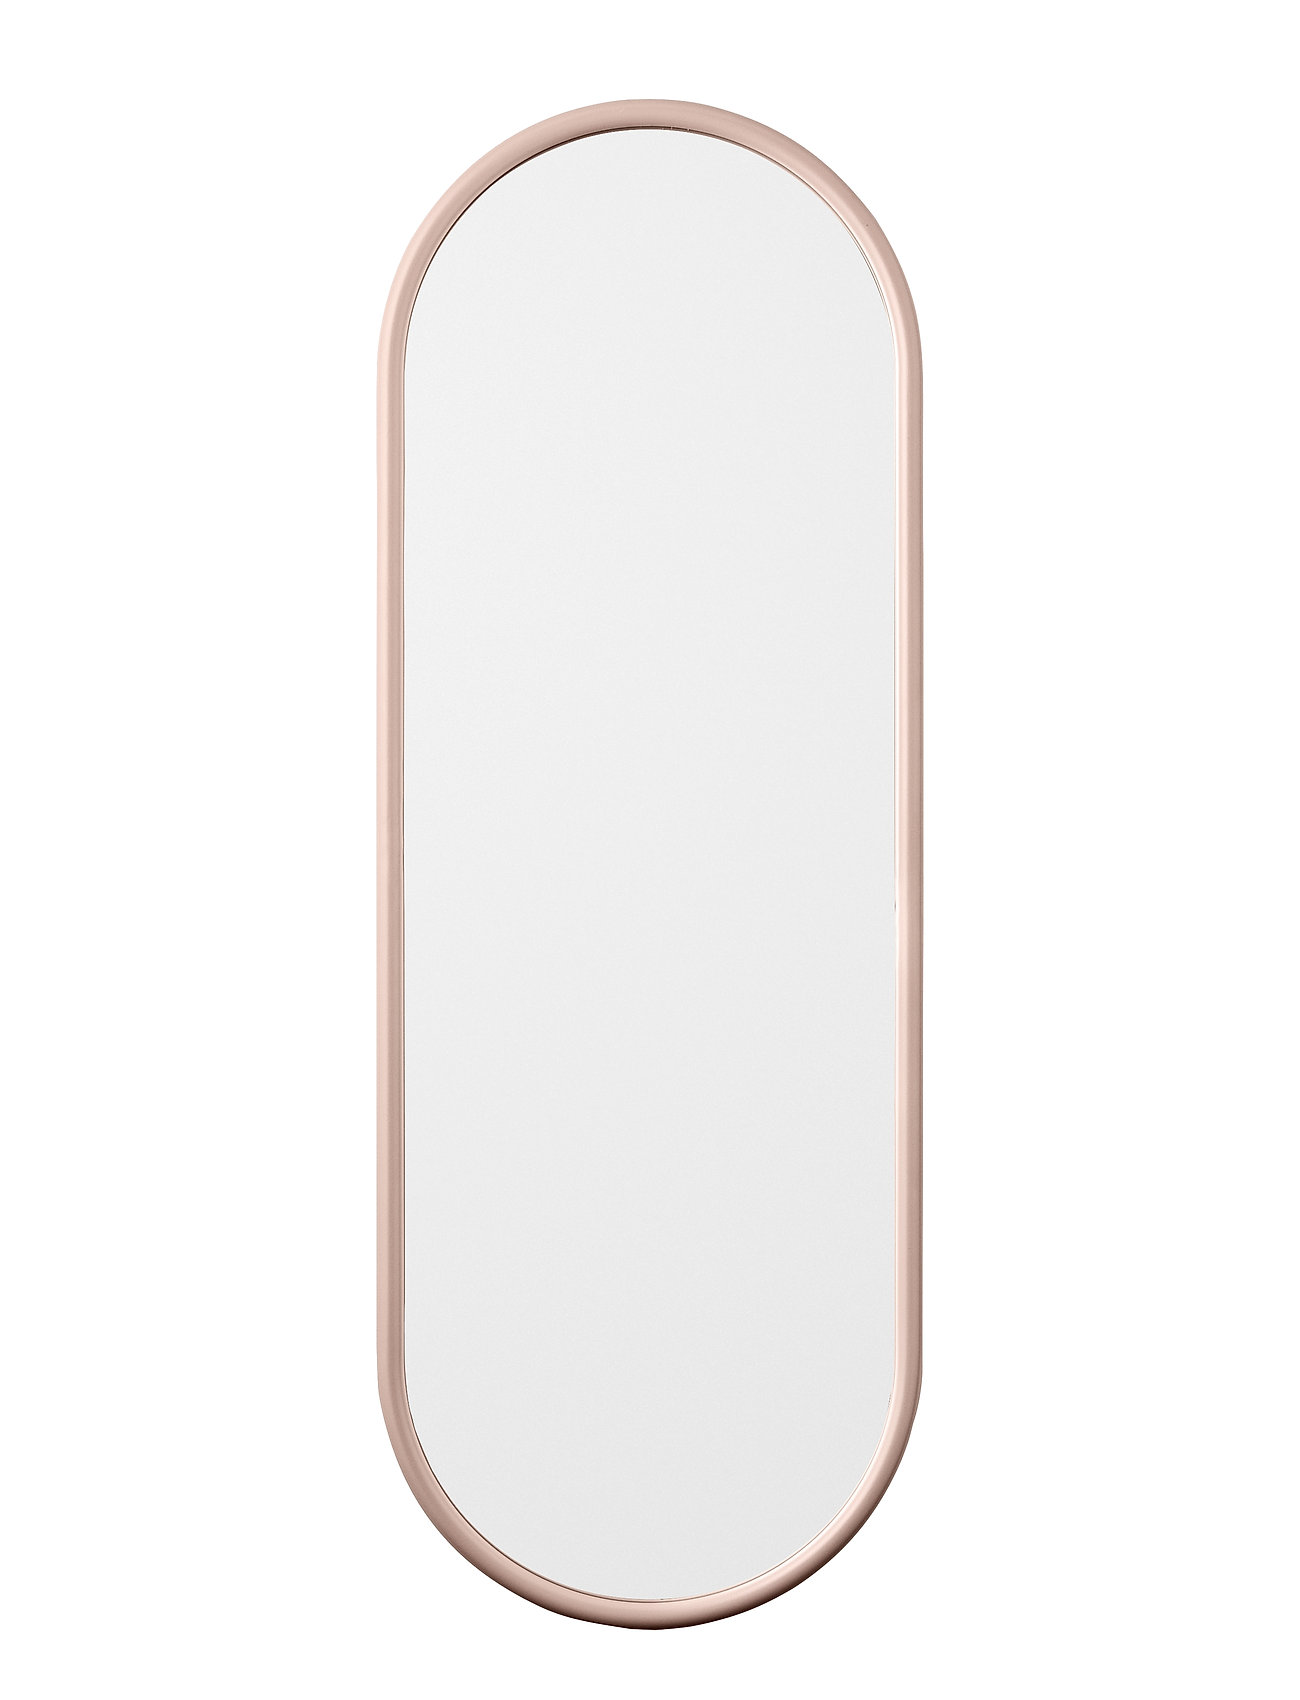 Angui Spejl Home Furniture Mirrors Wall Mirrors Pink AYTM